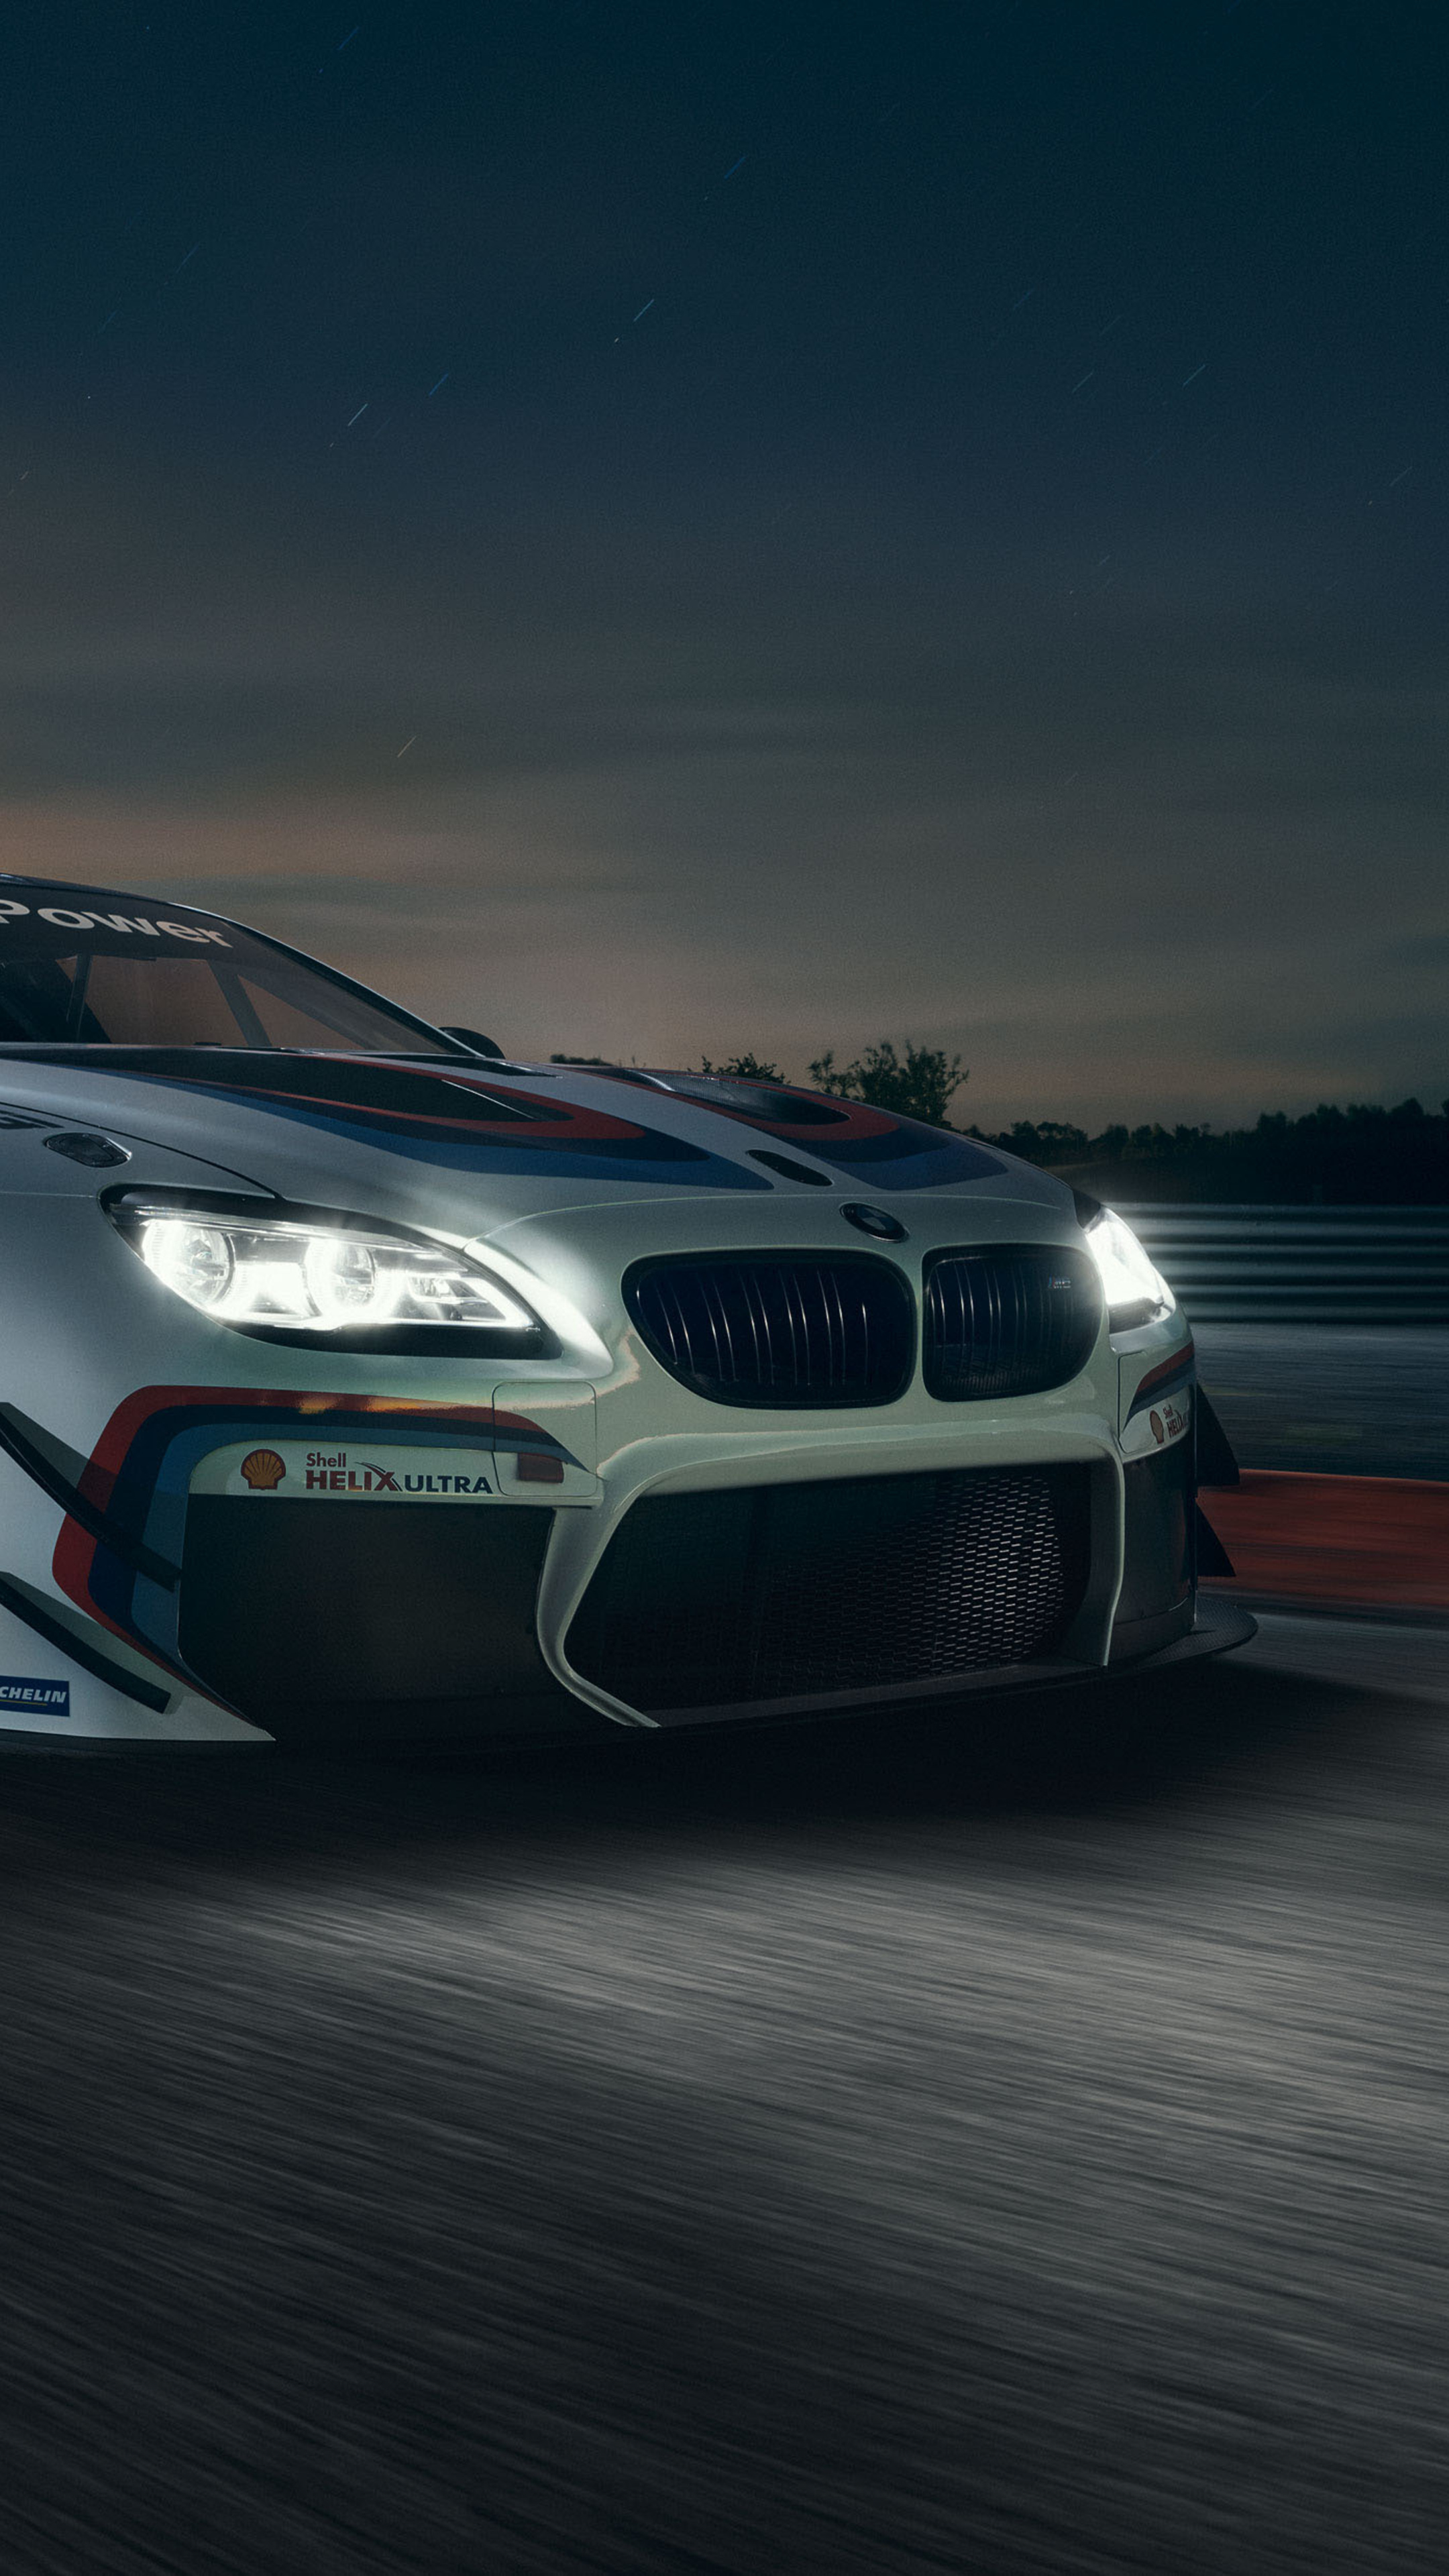 Motorsports: BMW M4 Sport Edition, Shell Helix Ultra, Racing at night. 2160x3840 4K Wallpaper.